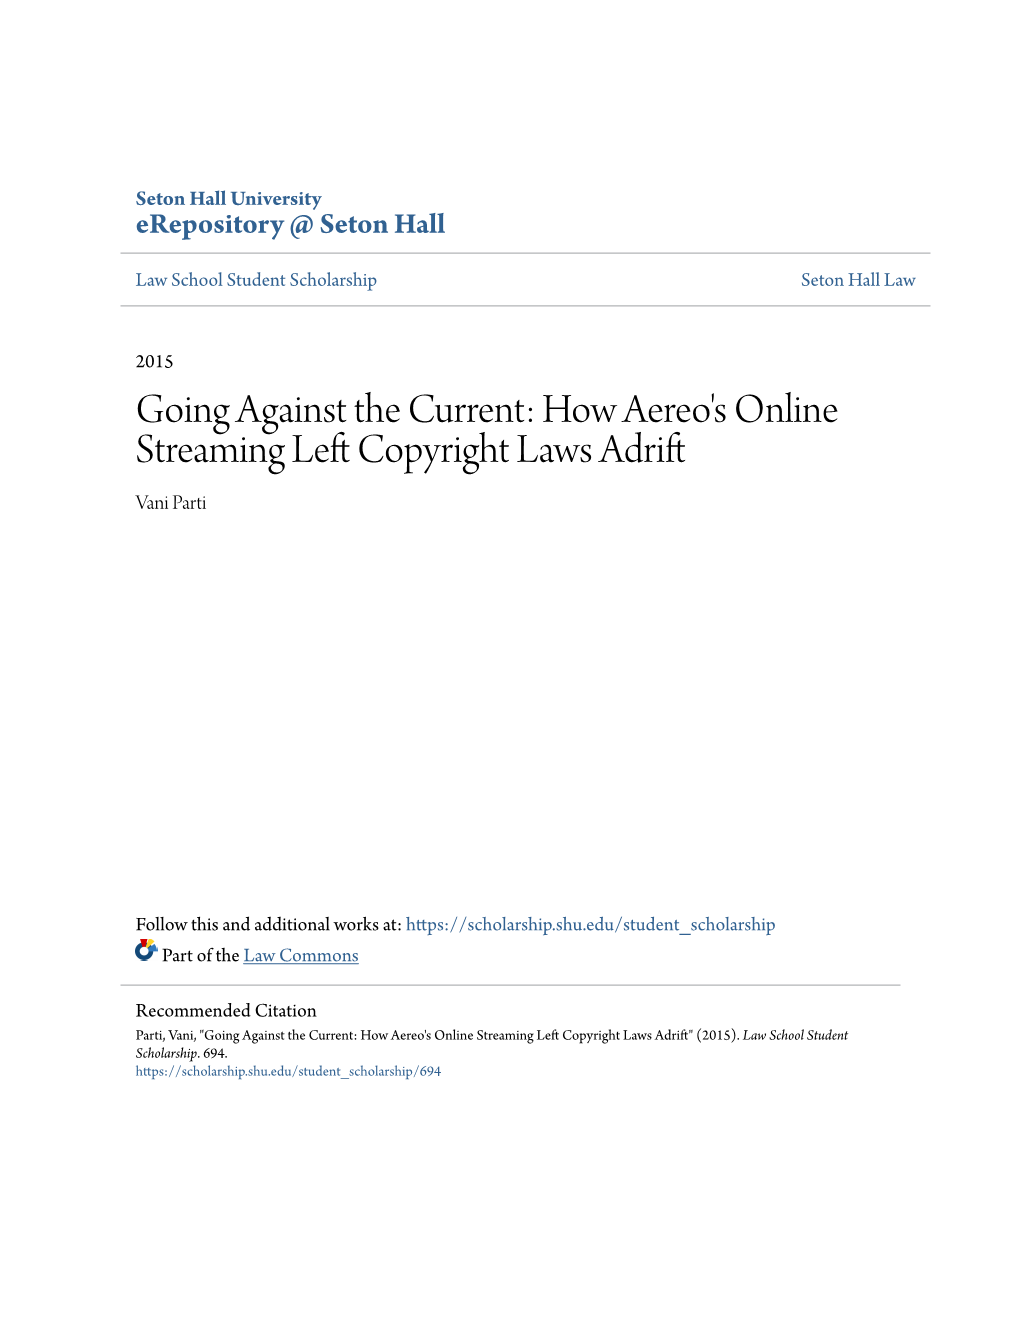 How Aereo's Online Streaming Left Copyright Laws Adrift